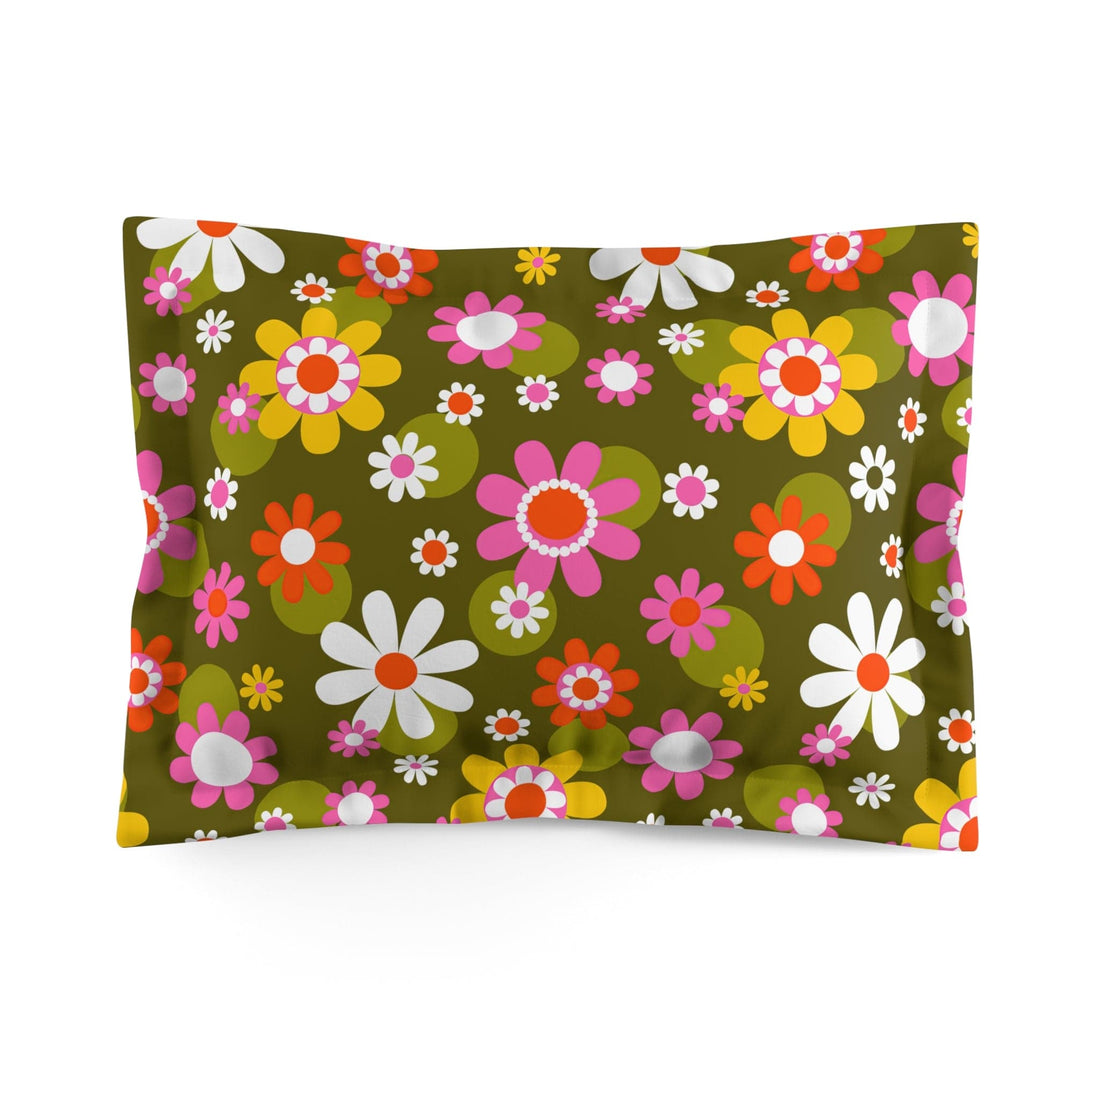 Printify Groovy Hippie Daisy Flower Power Pillow Sham, Retro Mid Mod Green, Pink Floral Bedroom Pillow Home Decor Standard 23189170097492609310